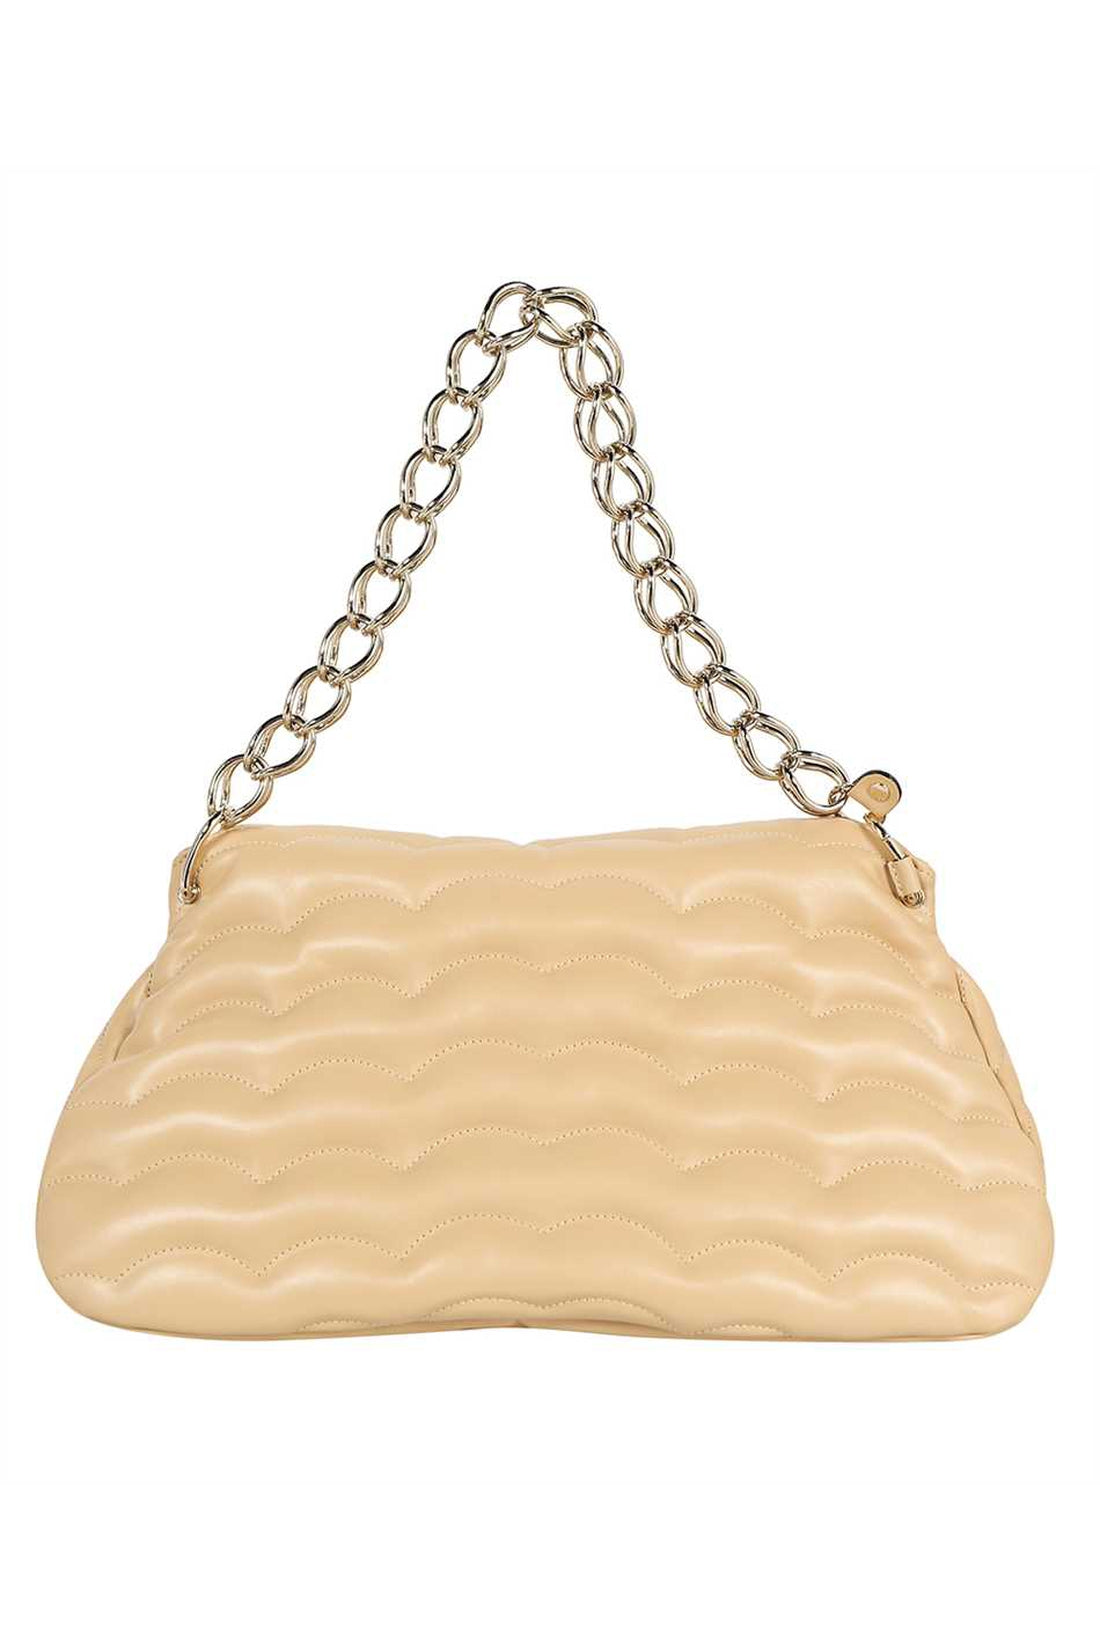 Chloé-OUTLET-SALE-Juana leather shoulder bag-ARCHIVIST